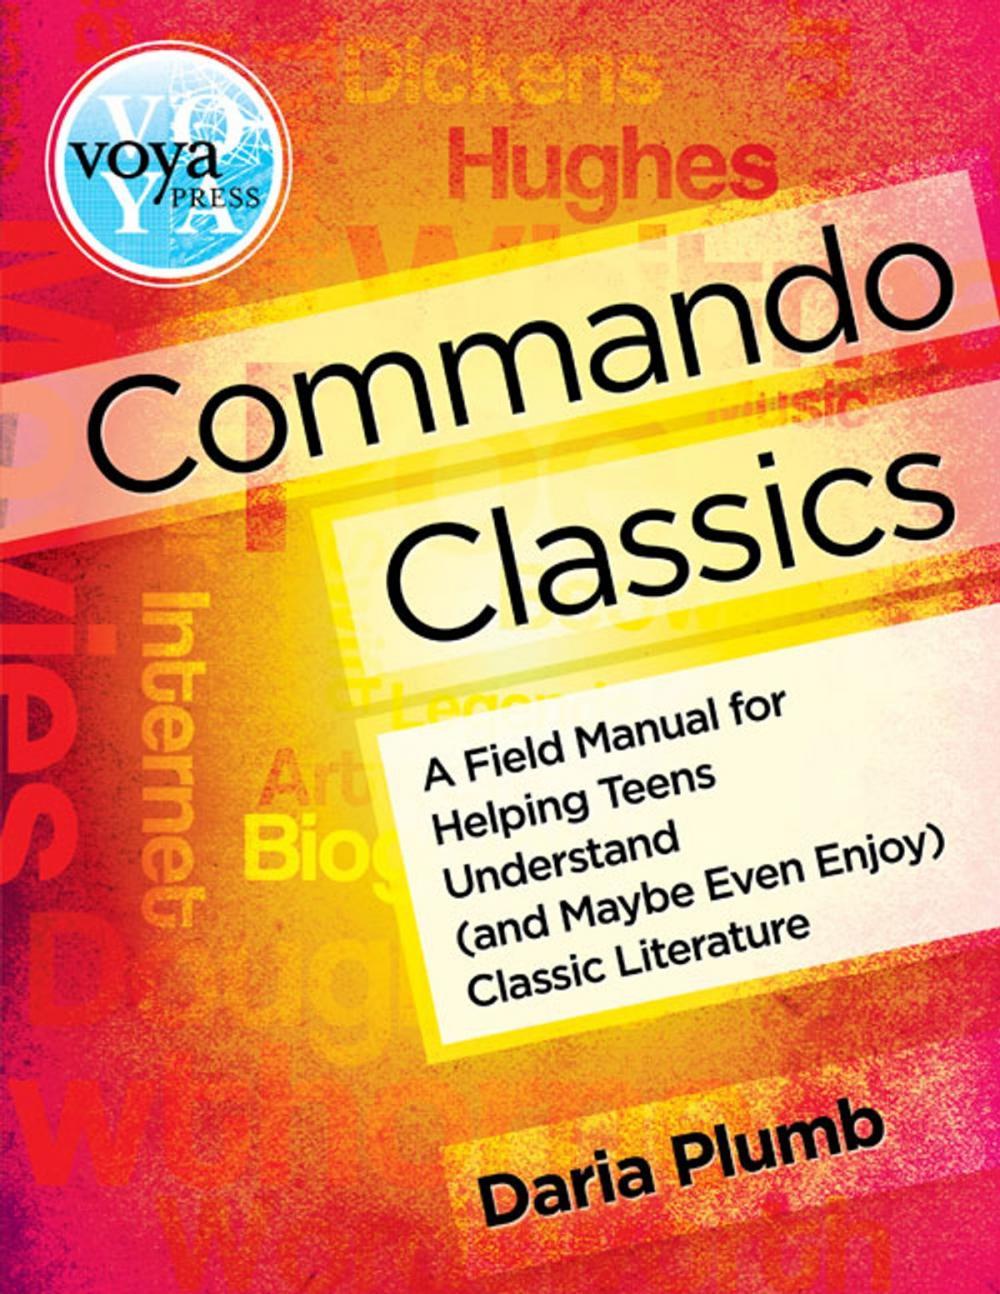 Big bigCover of Commando Classics